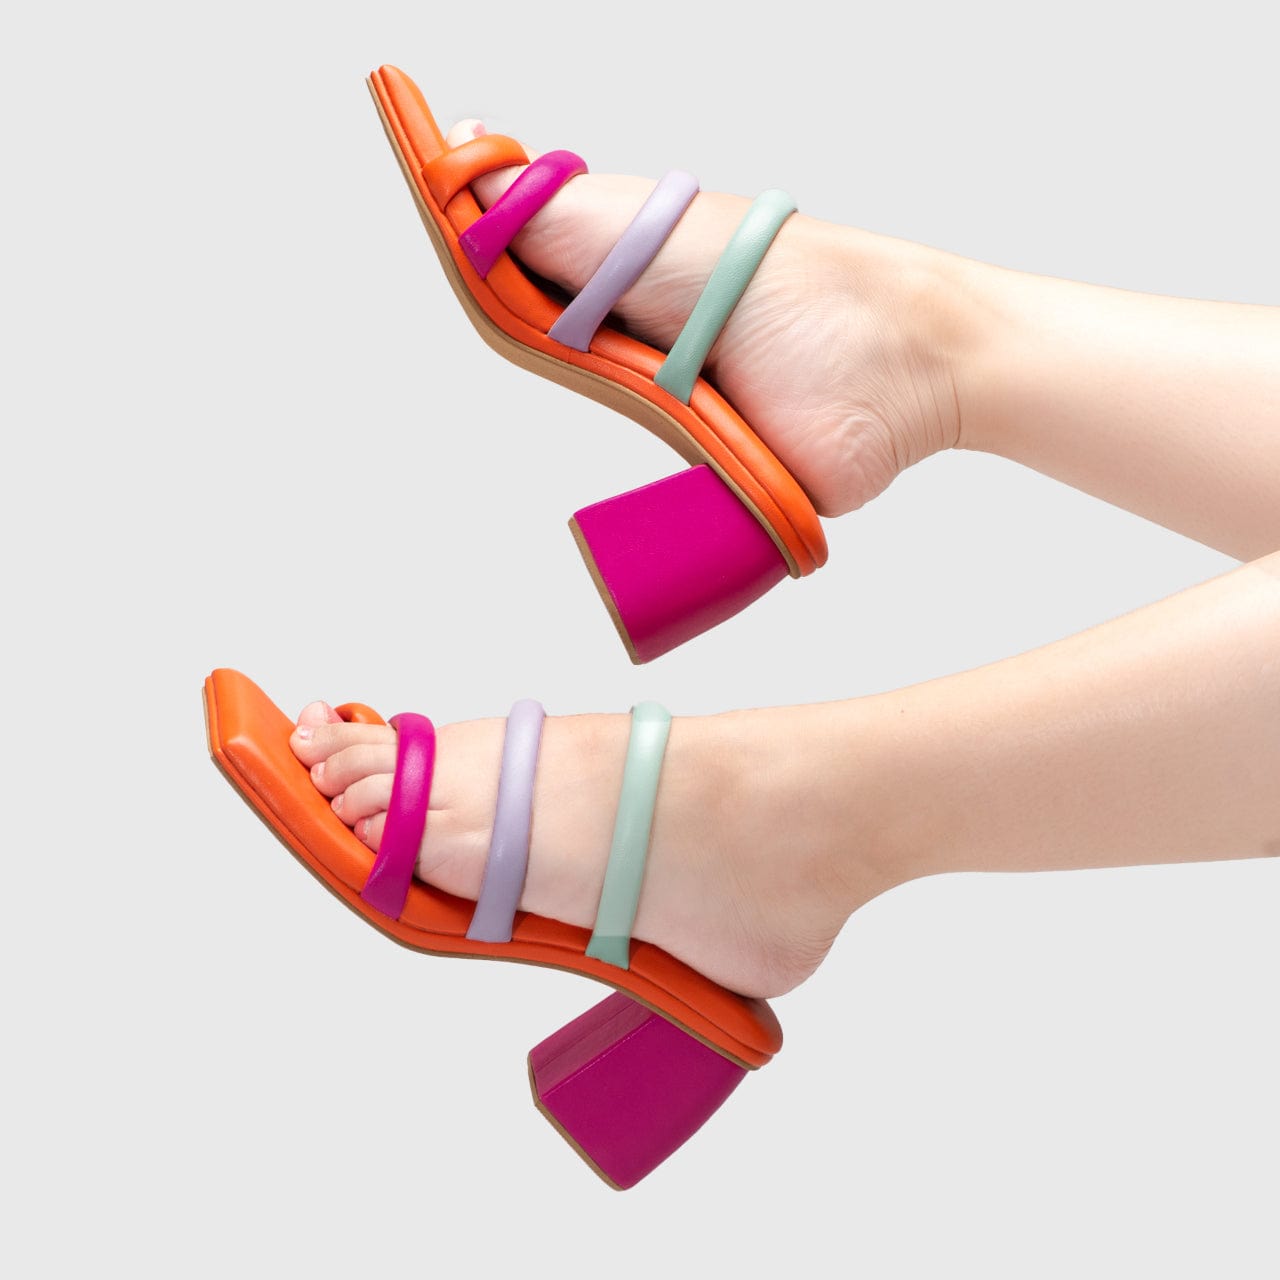 Adorable Projects Heels Cirillo Heels Colorblock